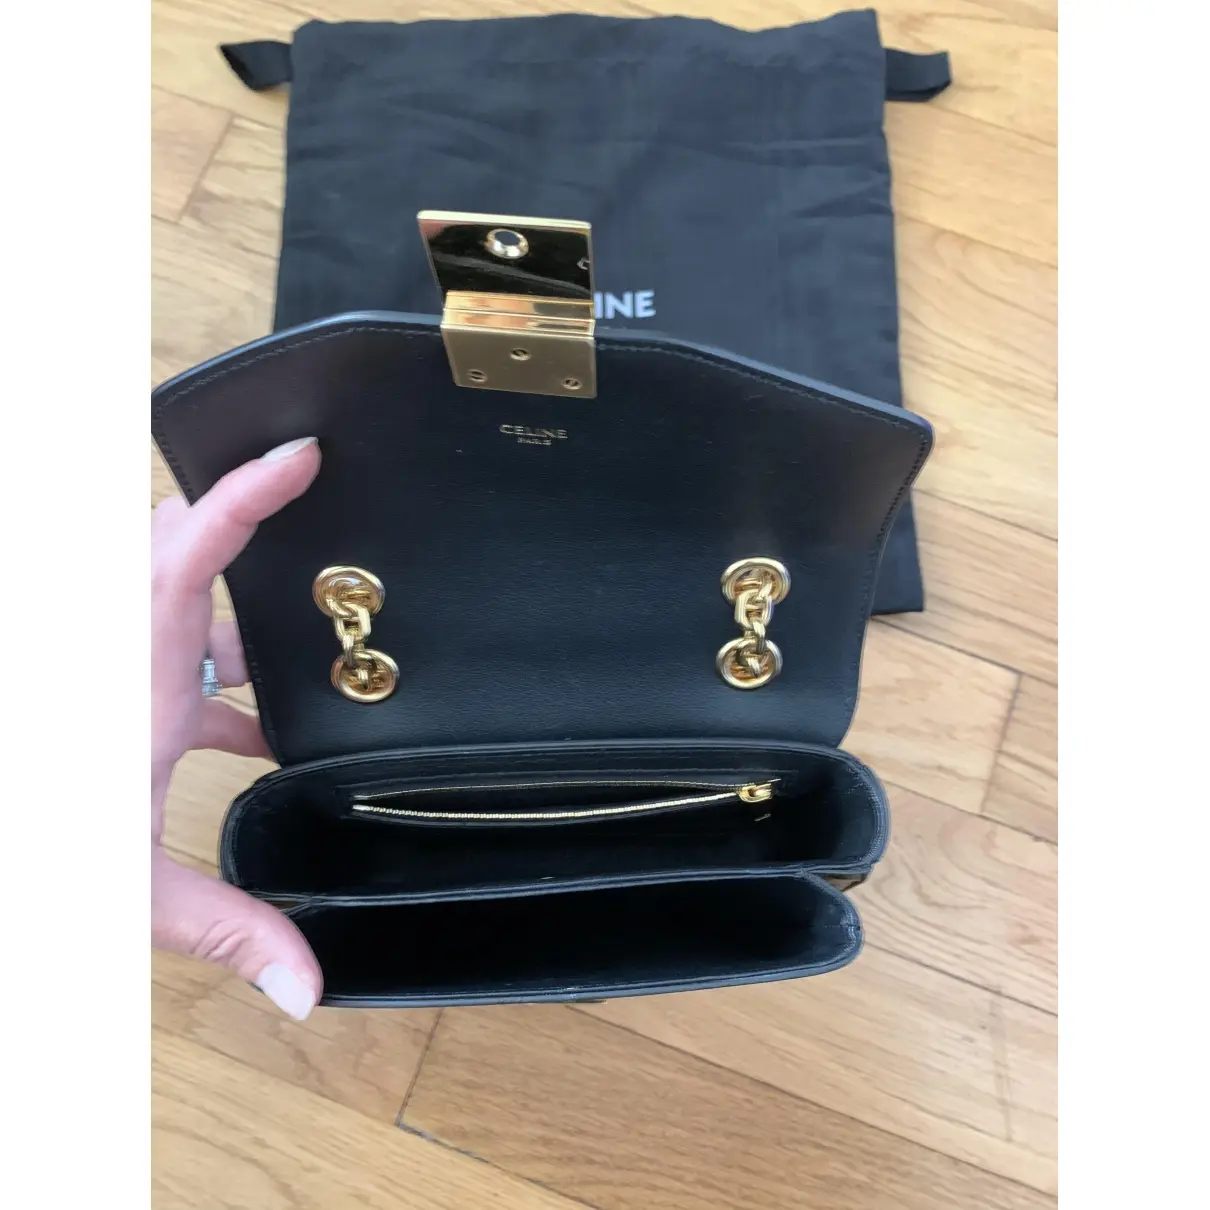 Buy Celine C bag leather mini bag online